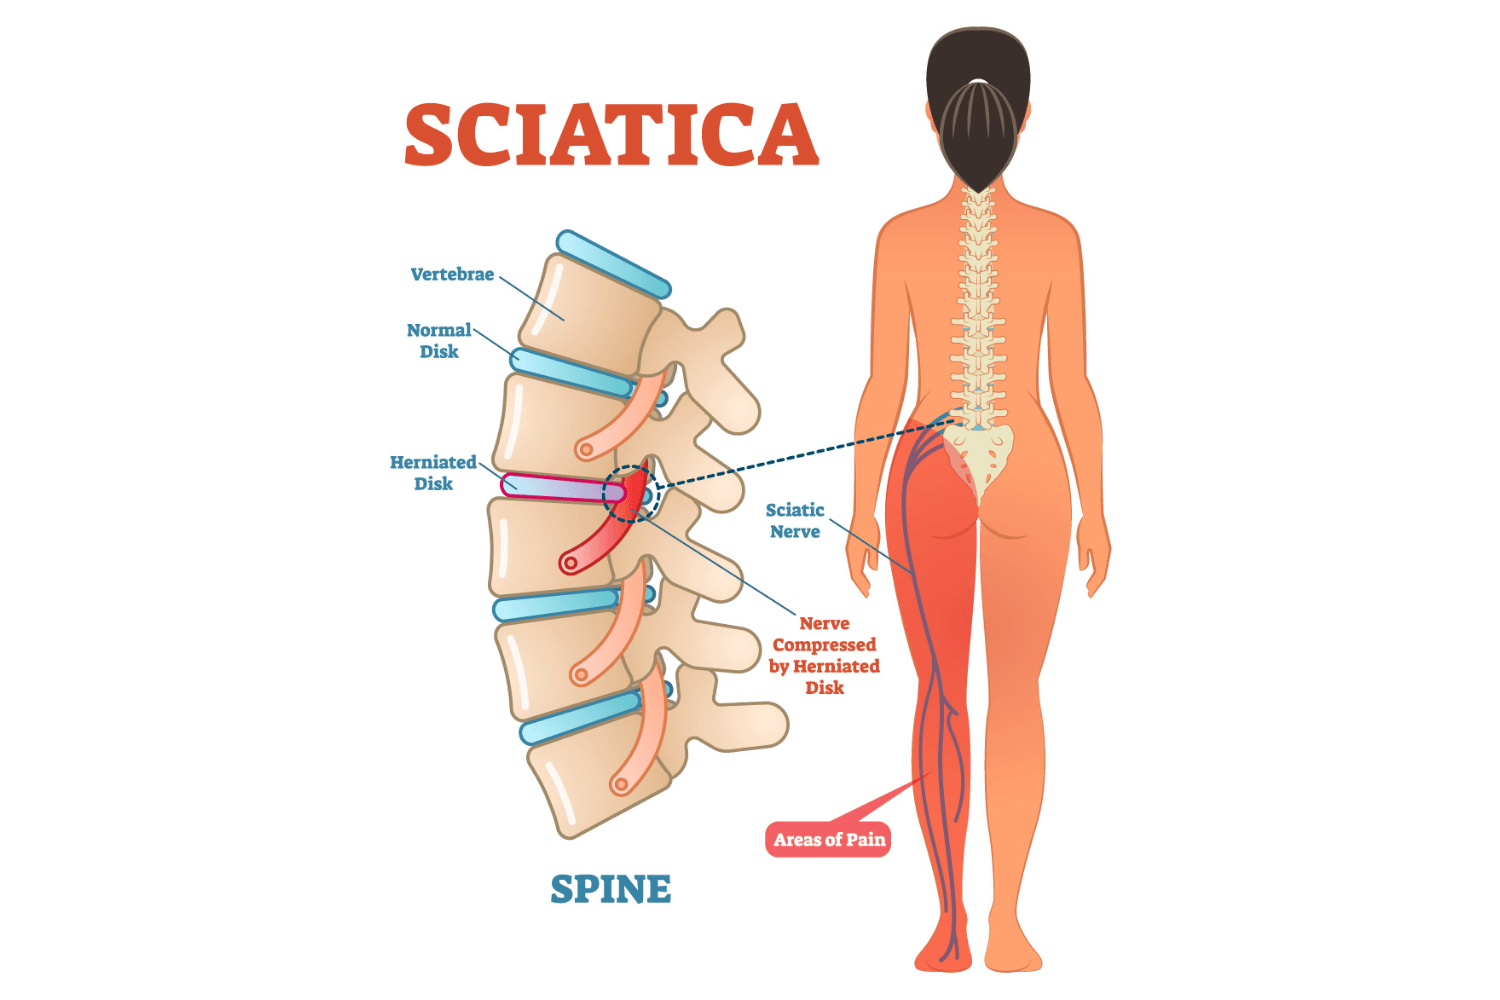 Information about Sciatica